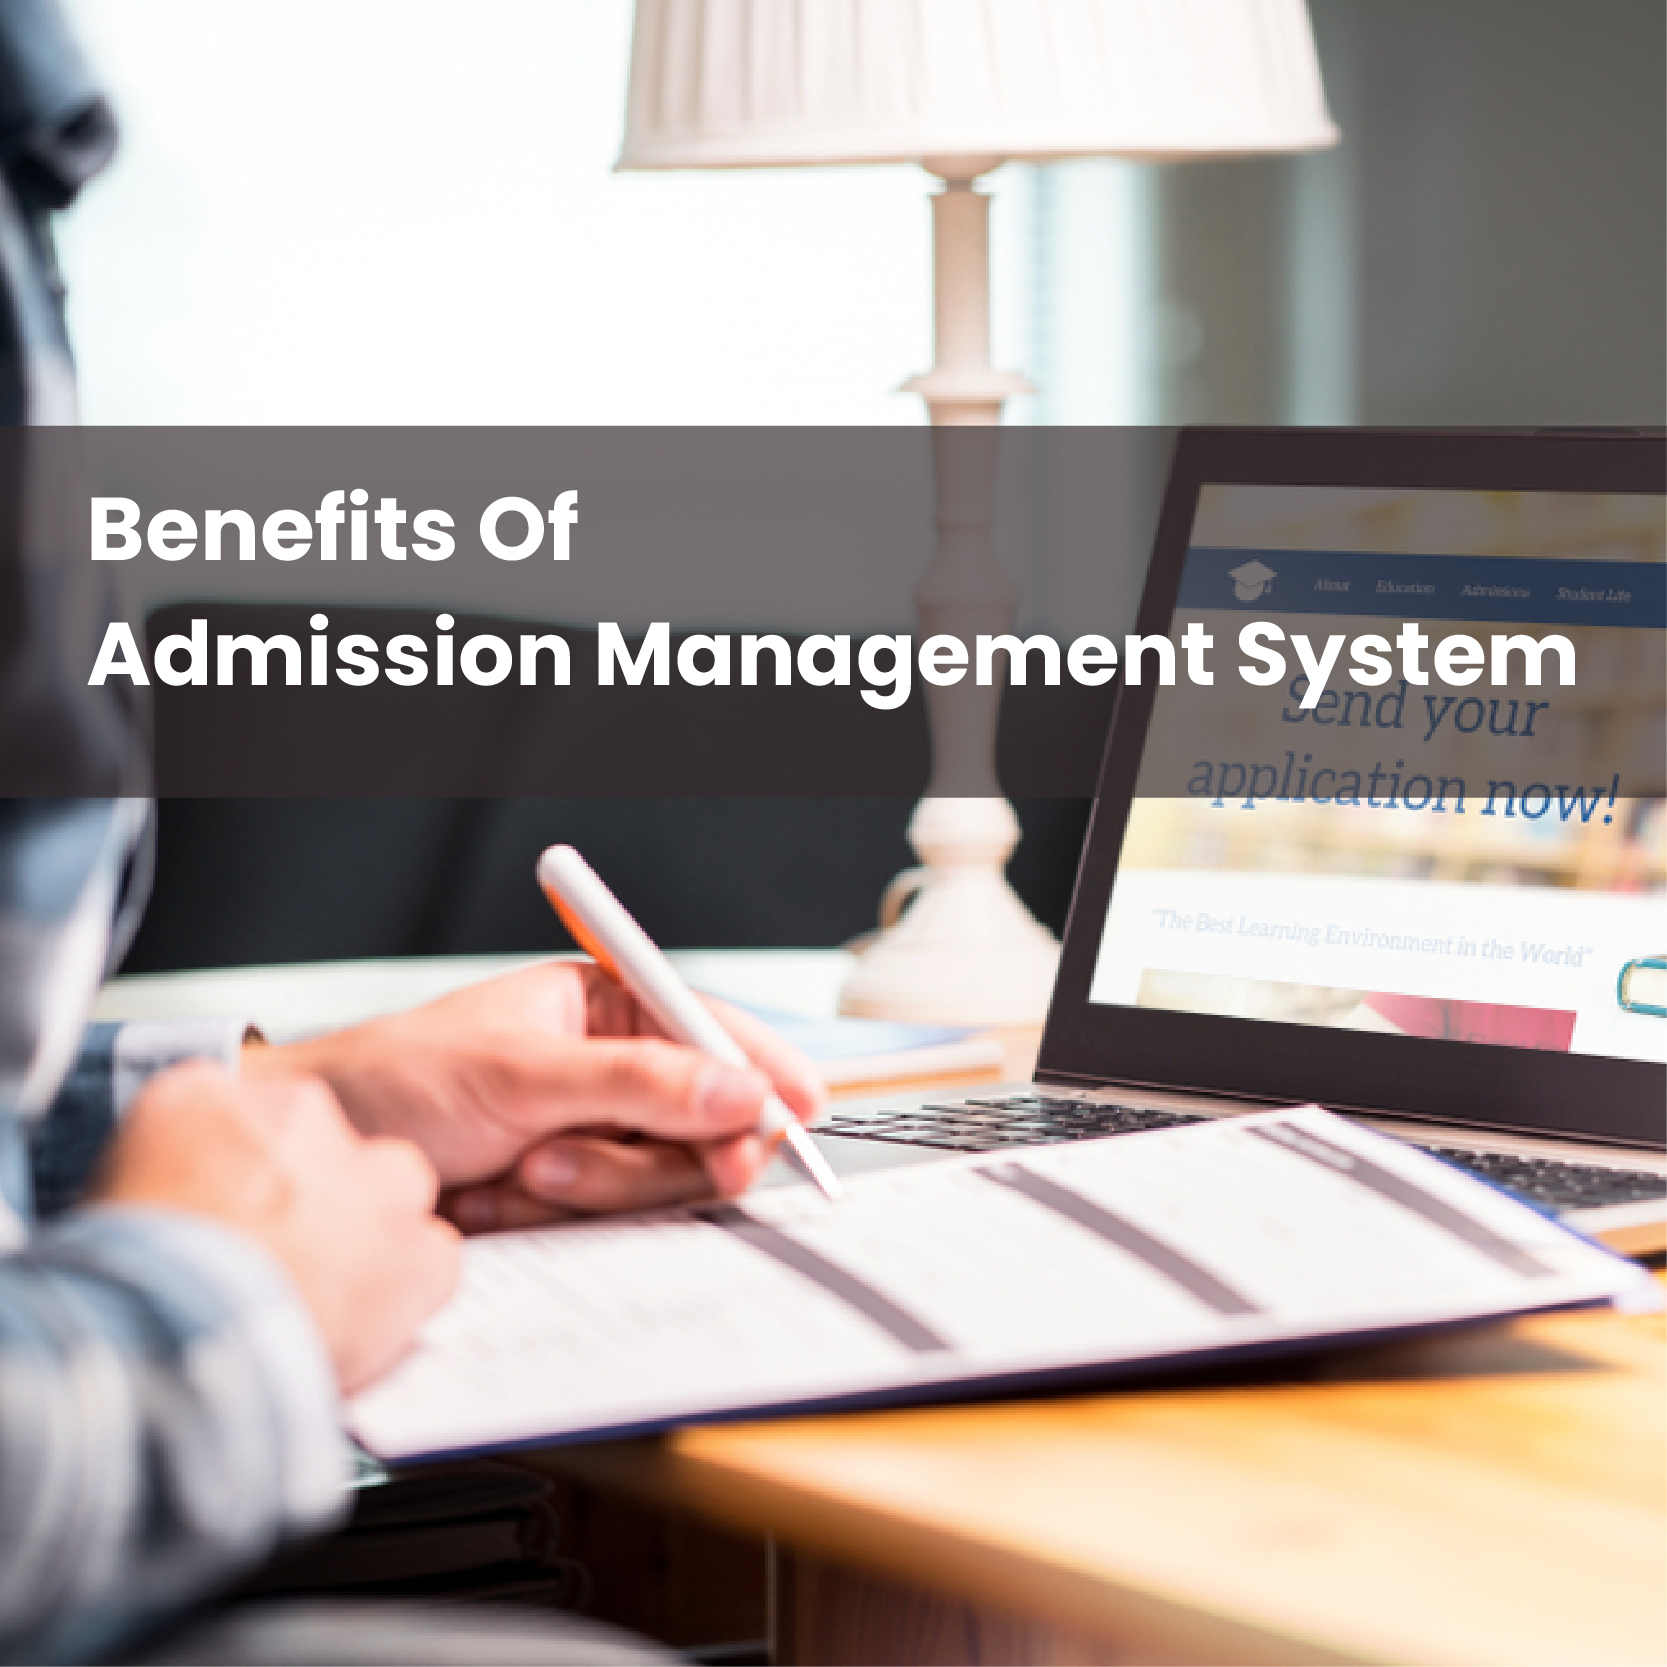 Benefits of Admission Management System